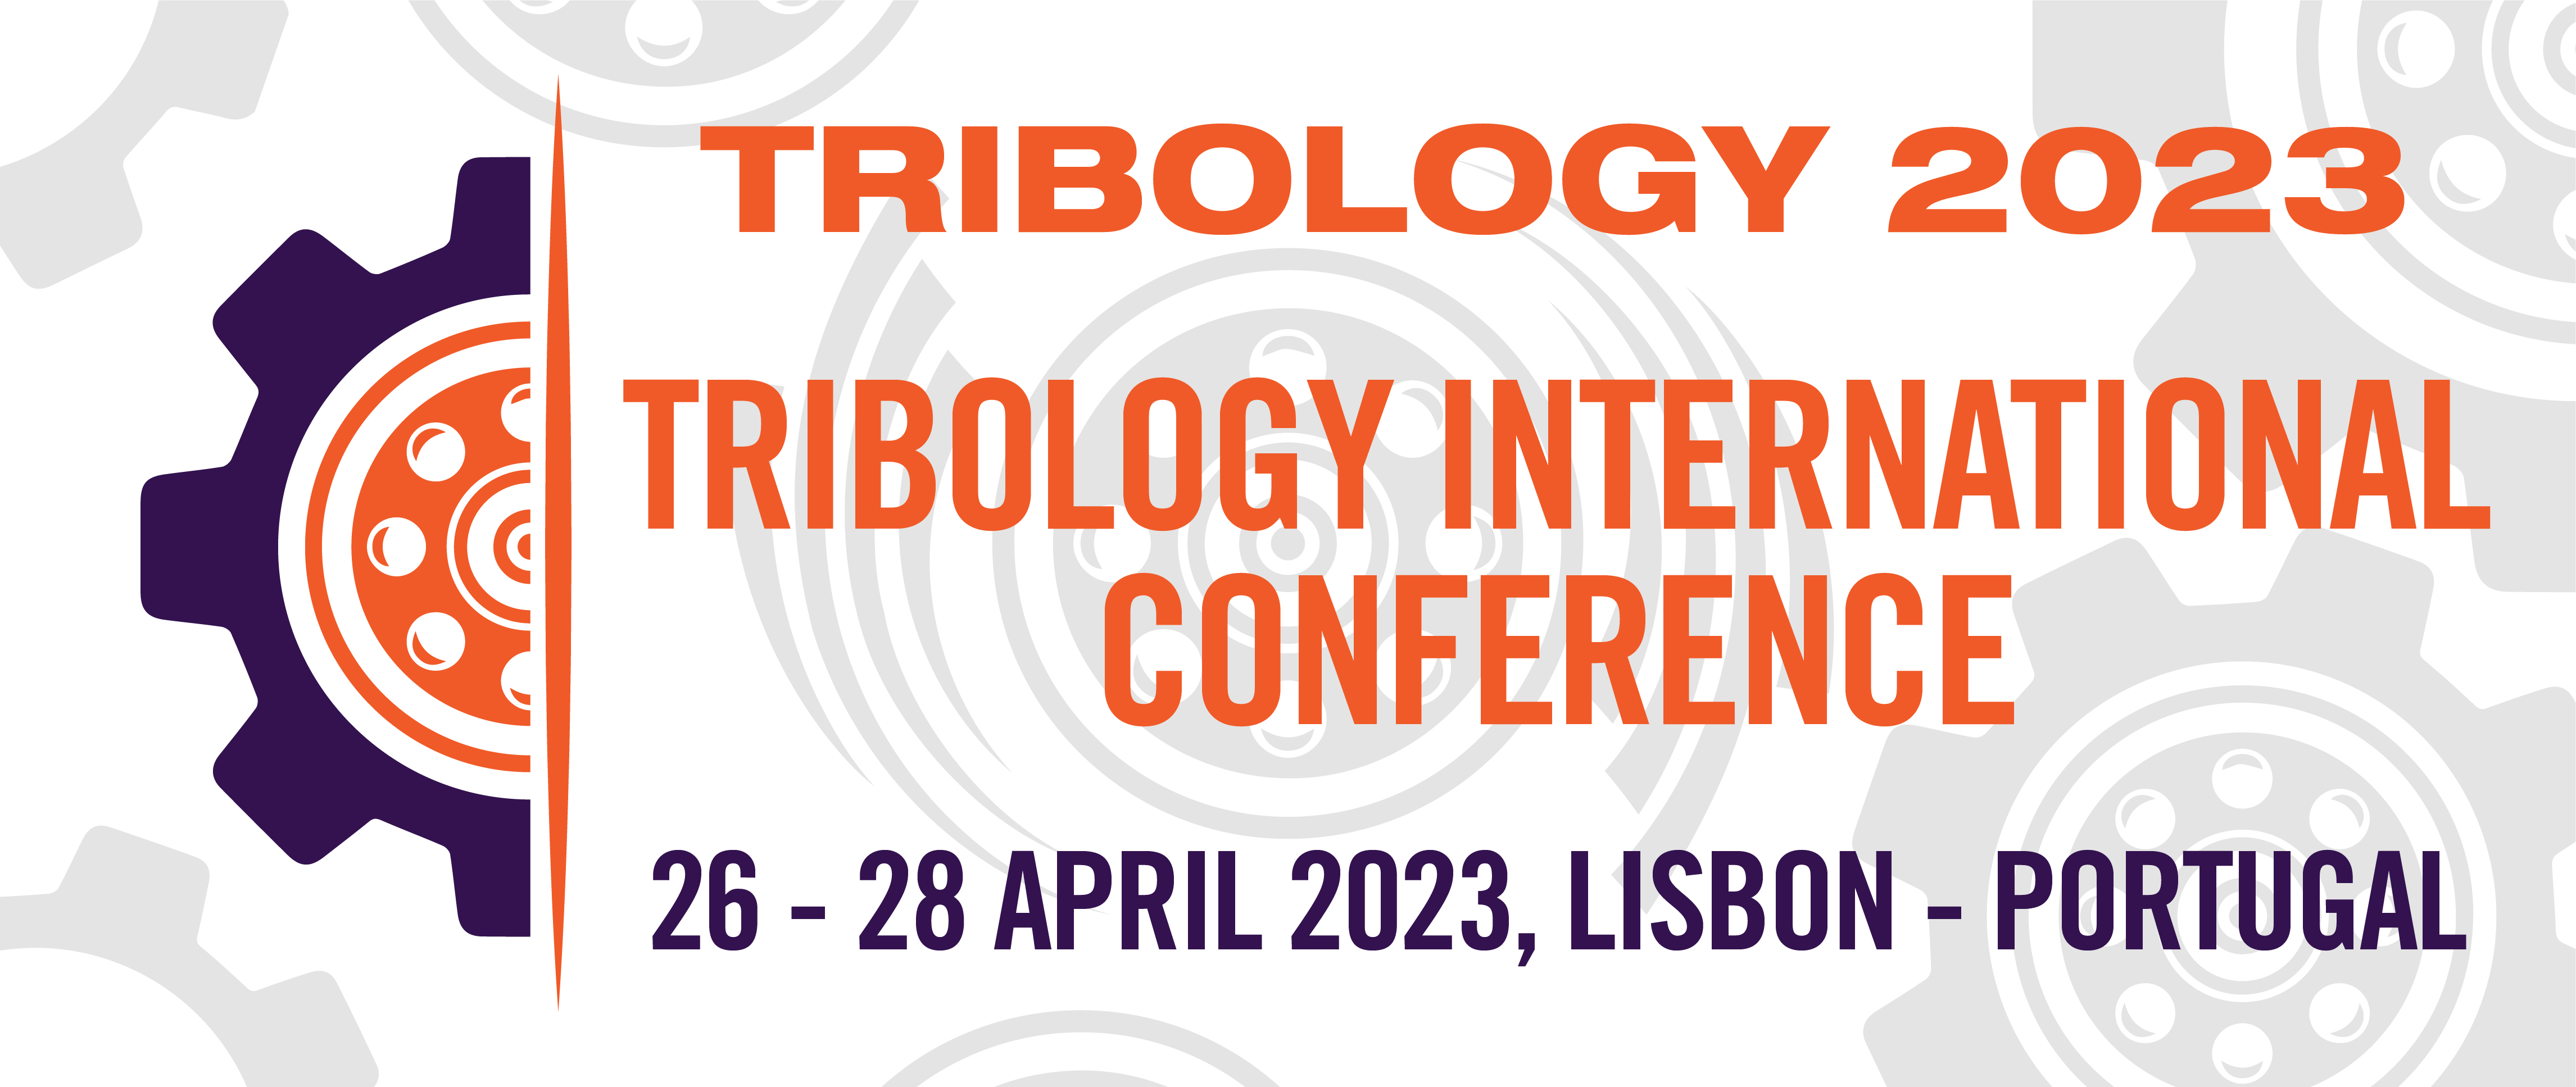 Tribology International Conference 2023